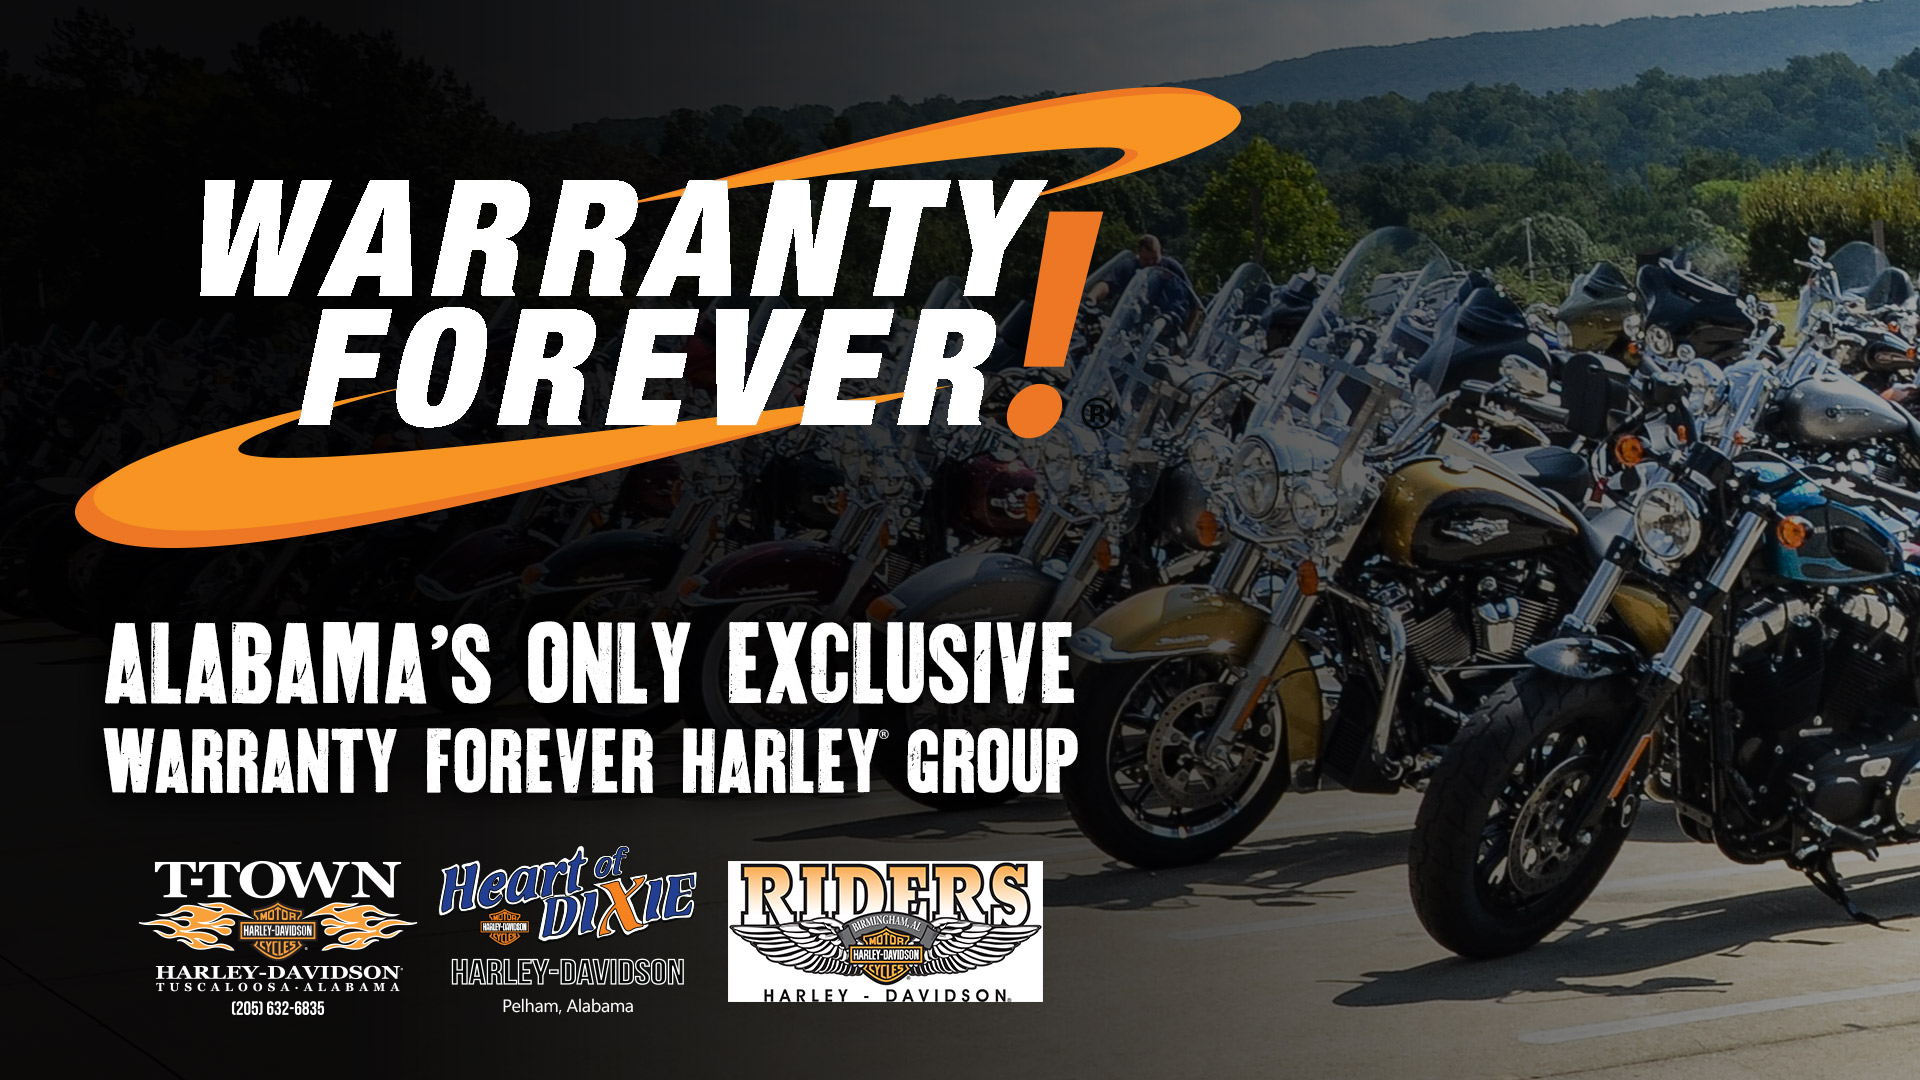 Warranty Forever - Lifetime Warranty on Harley Davidson Motorcycles at Heart of Dixie Harley-Davidson